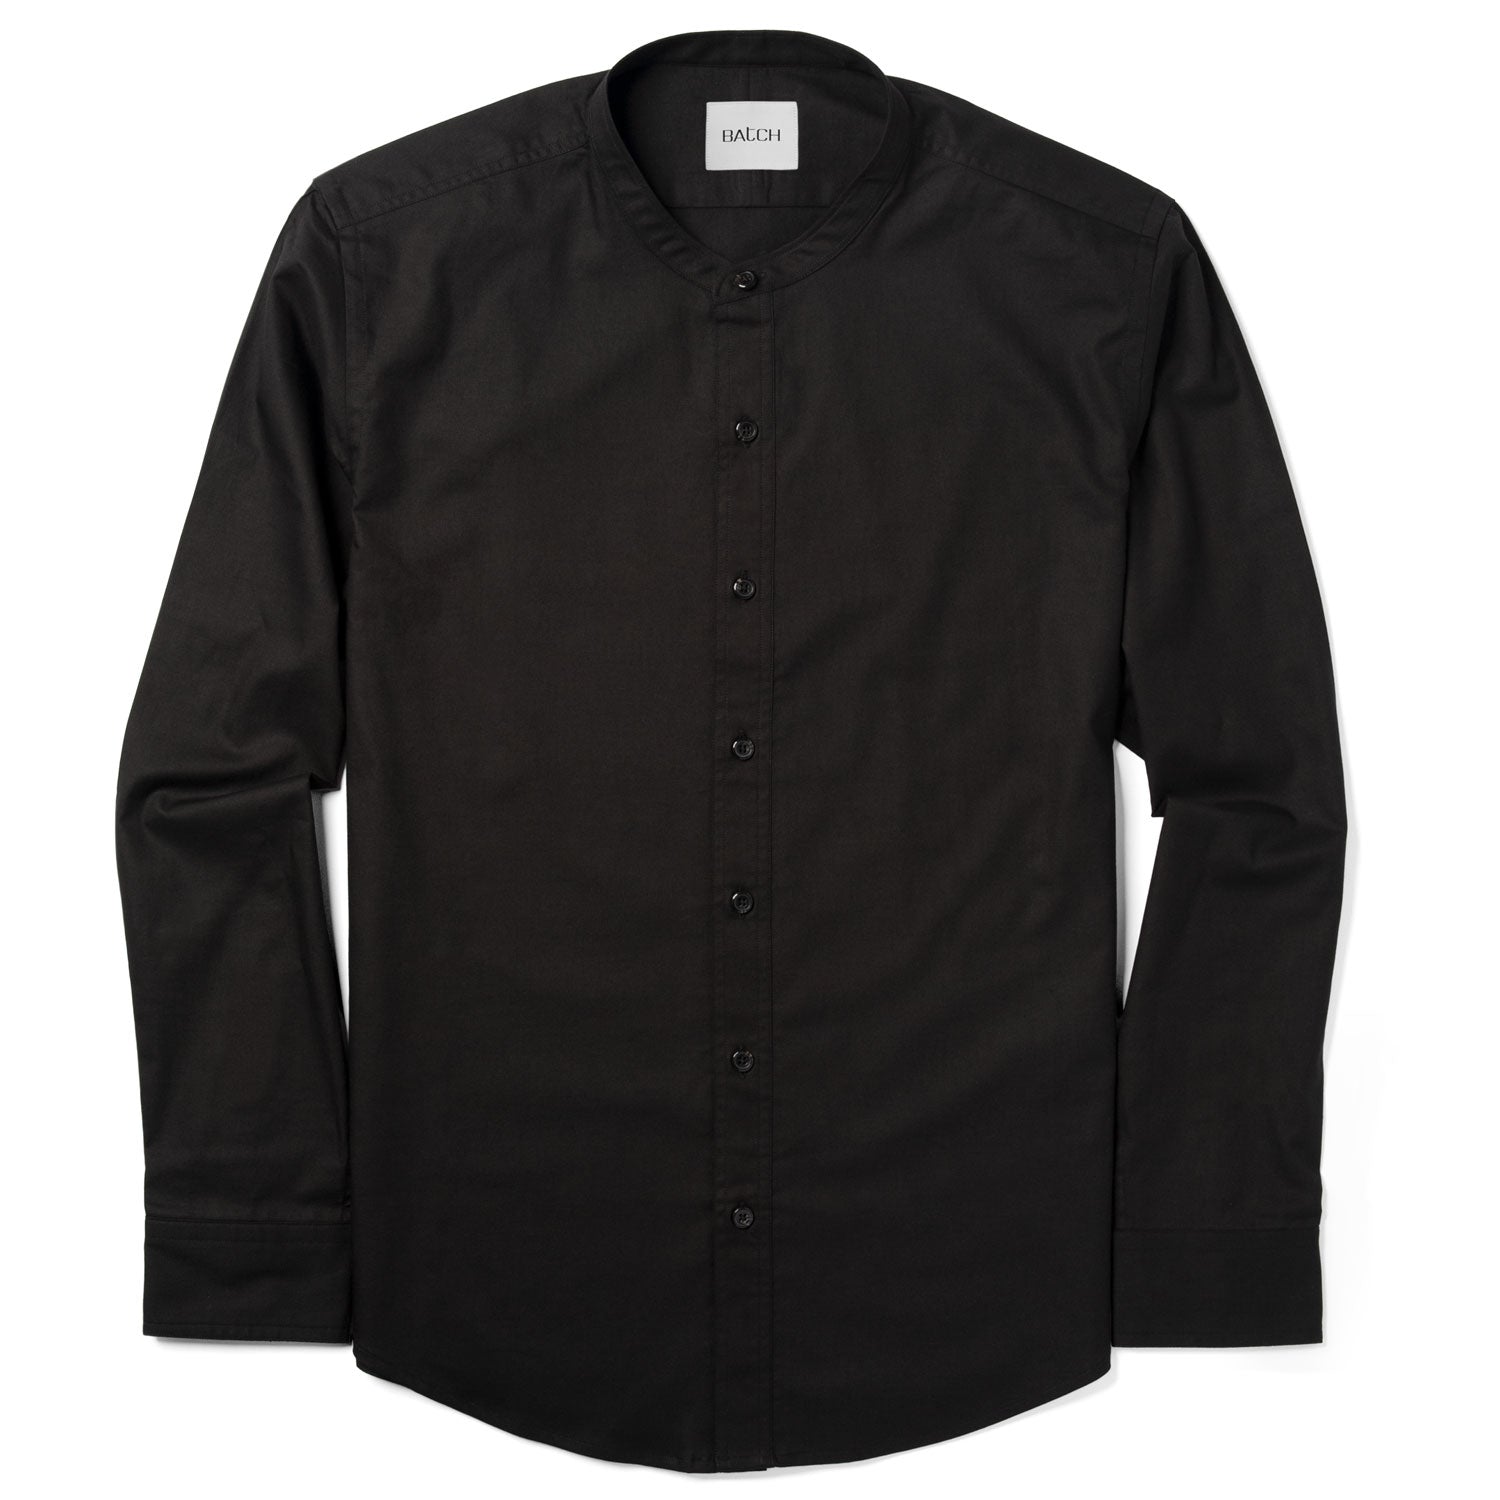 Essential Band Collar Button Down Shirt - Black Cotton Twill